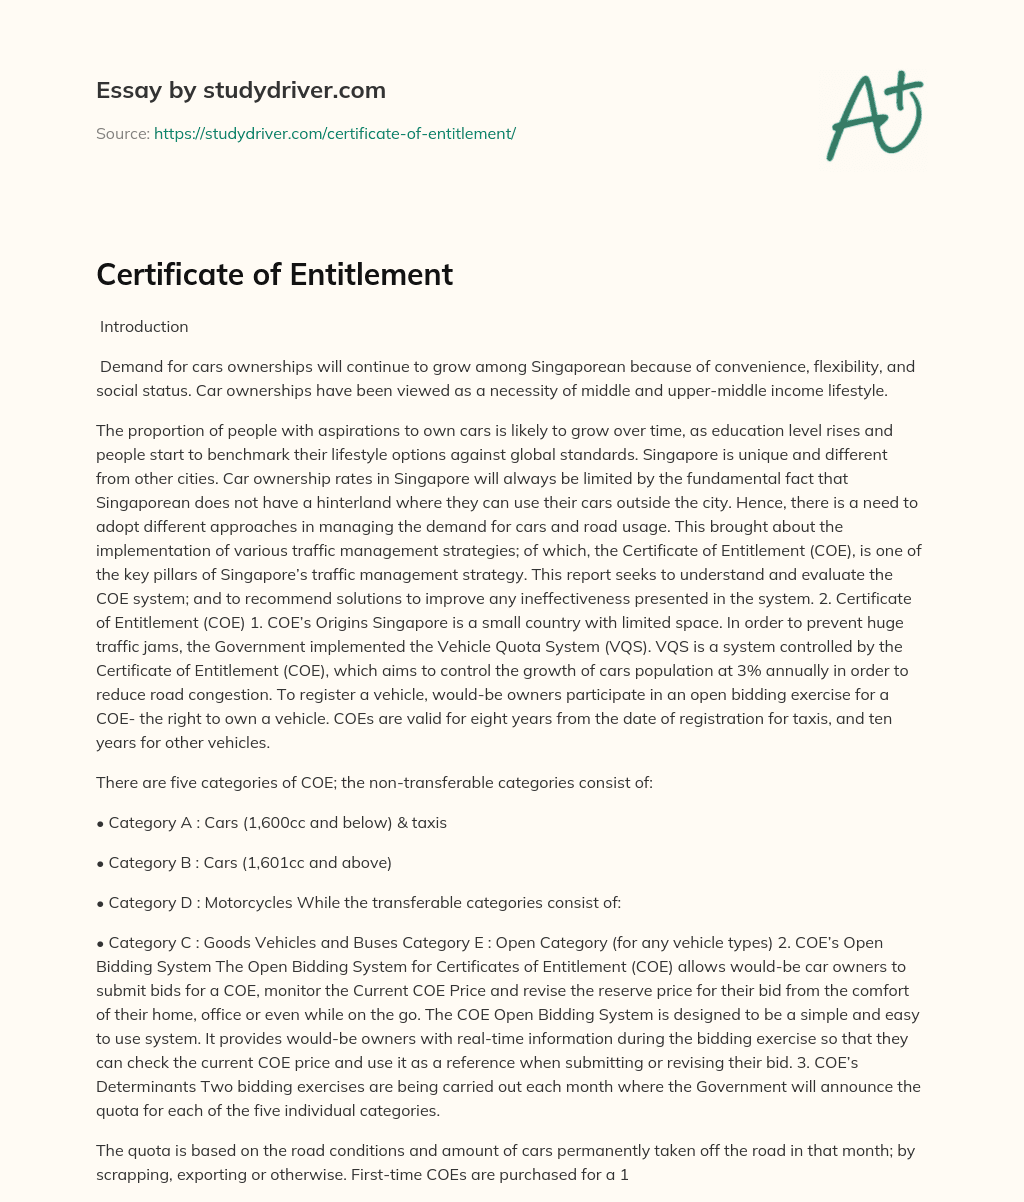 Certificate of Entitlement essay